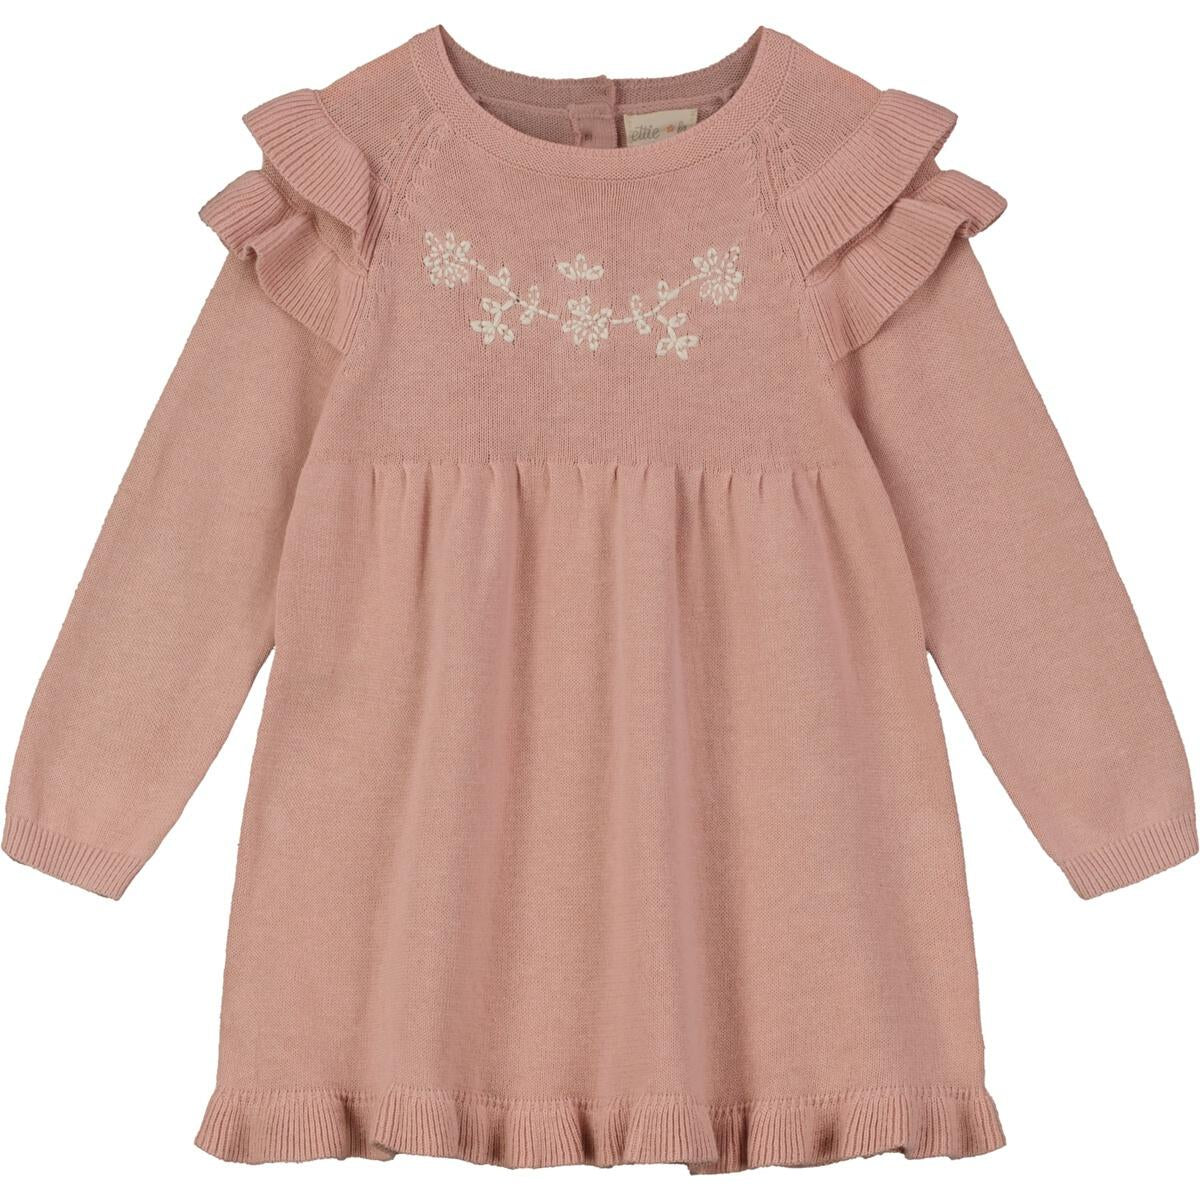 Soft Pink Embroidered Ruffle Sweater Dress